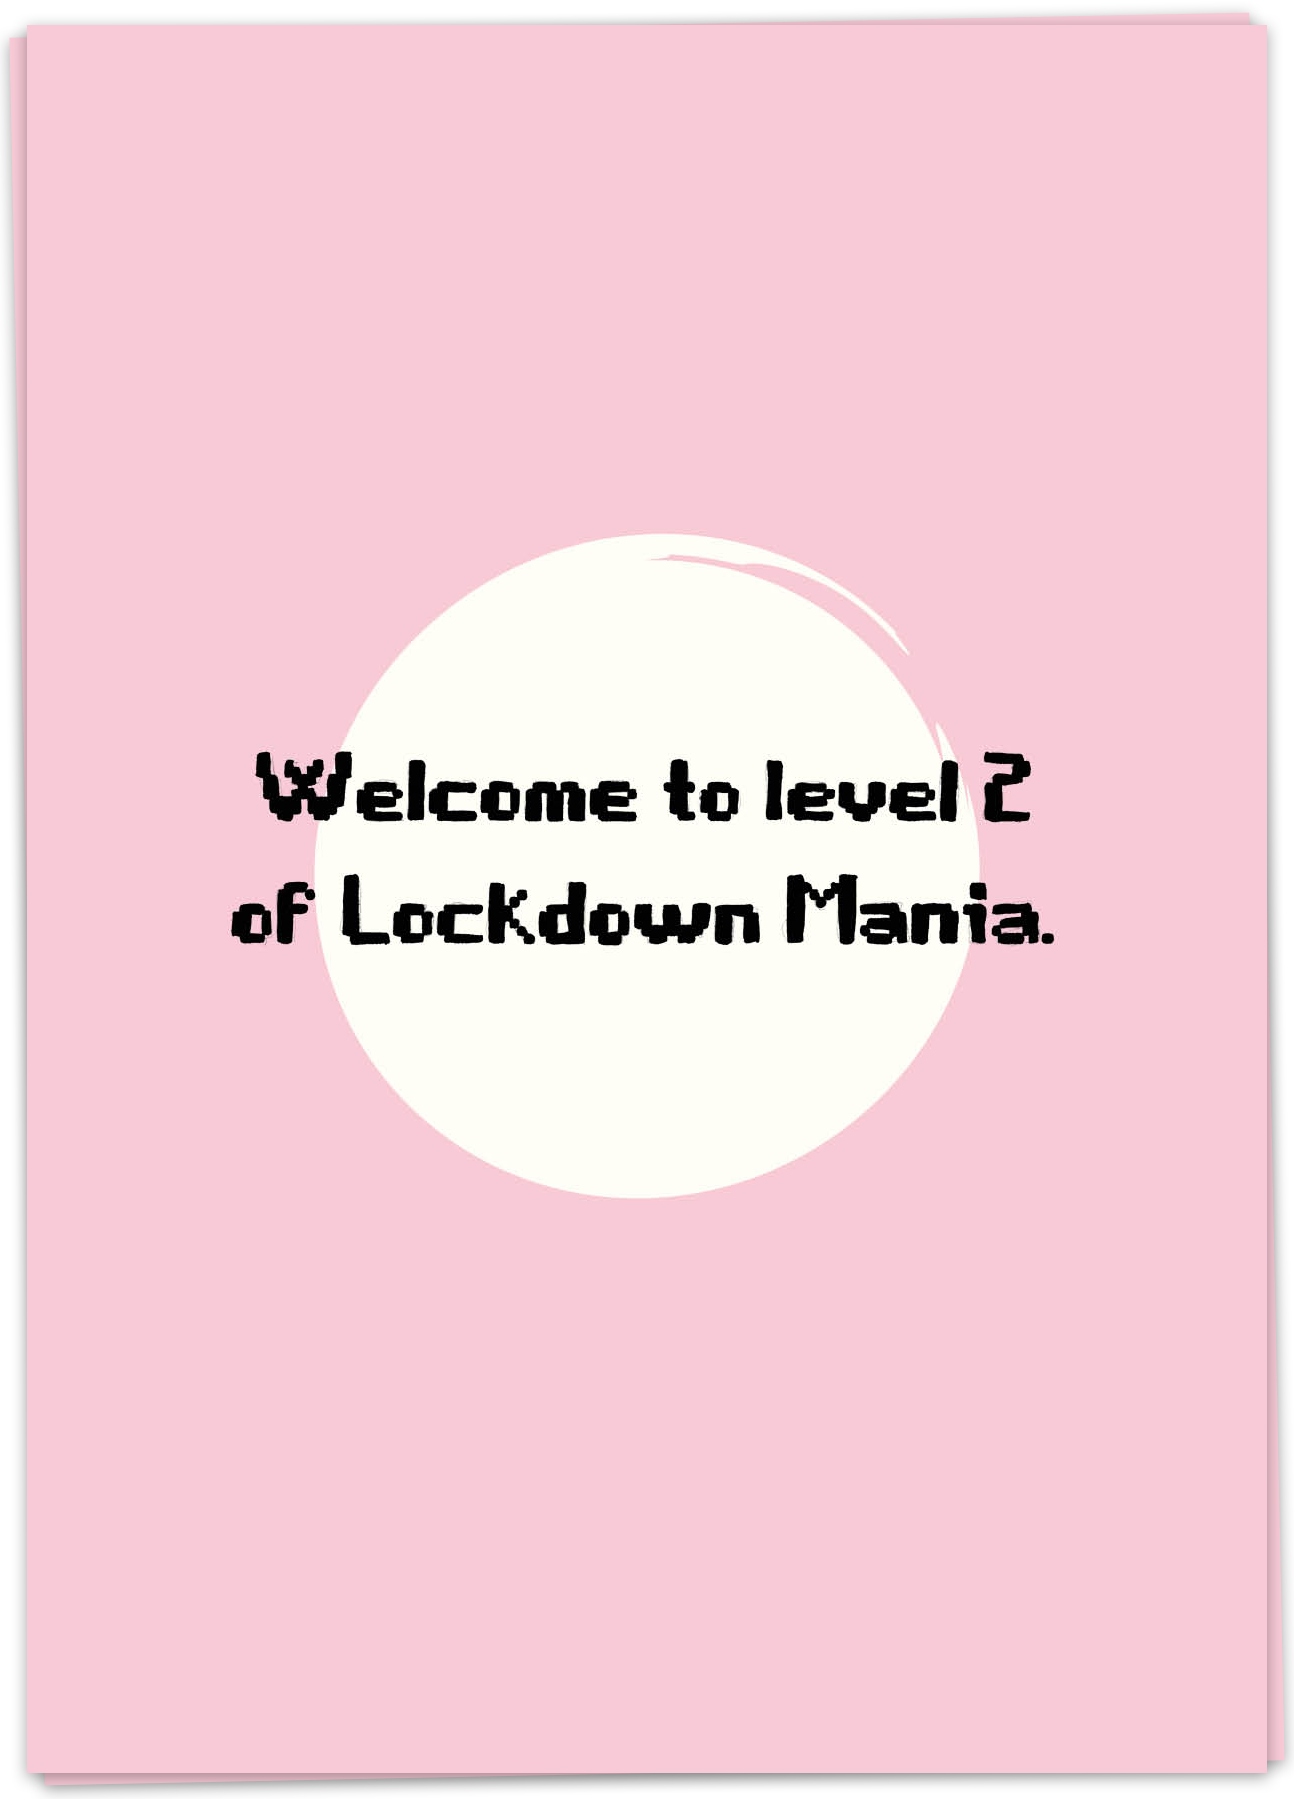 Lockdown mania